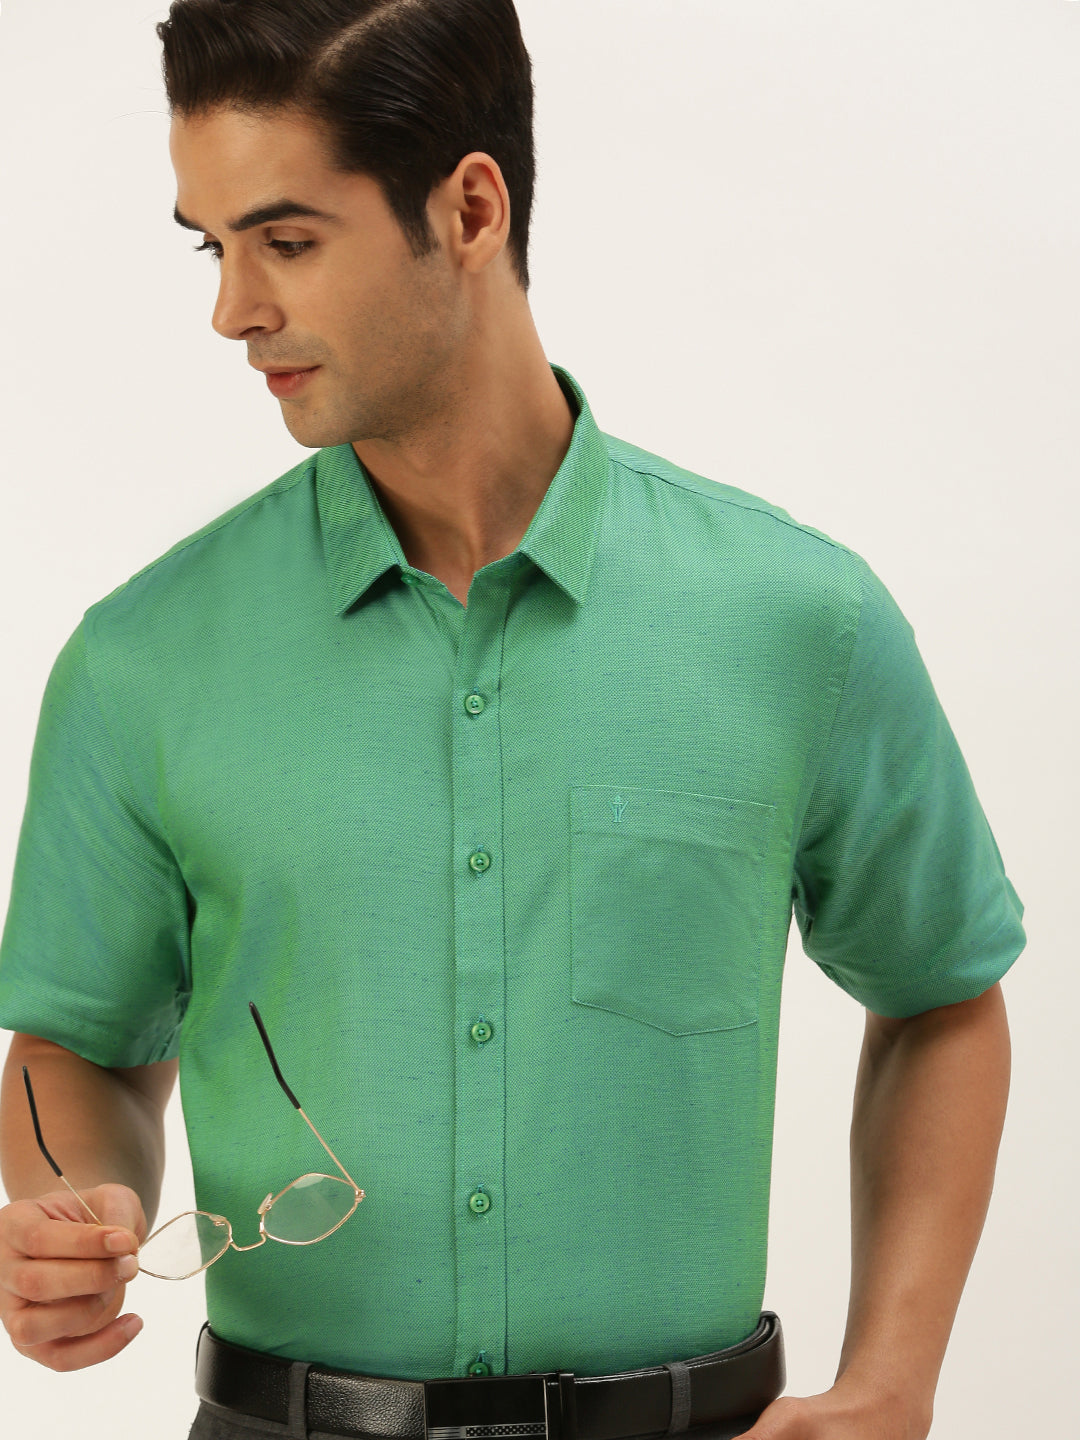 Mens Formal Shirt Half Sleeves Green CY10-Front view